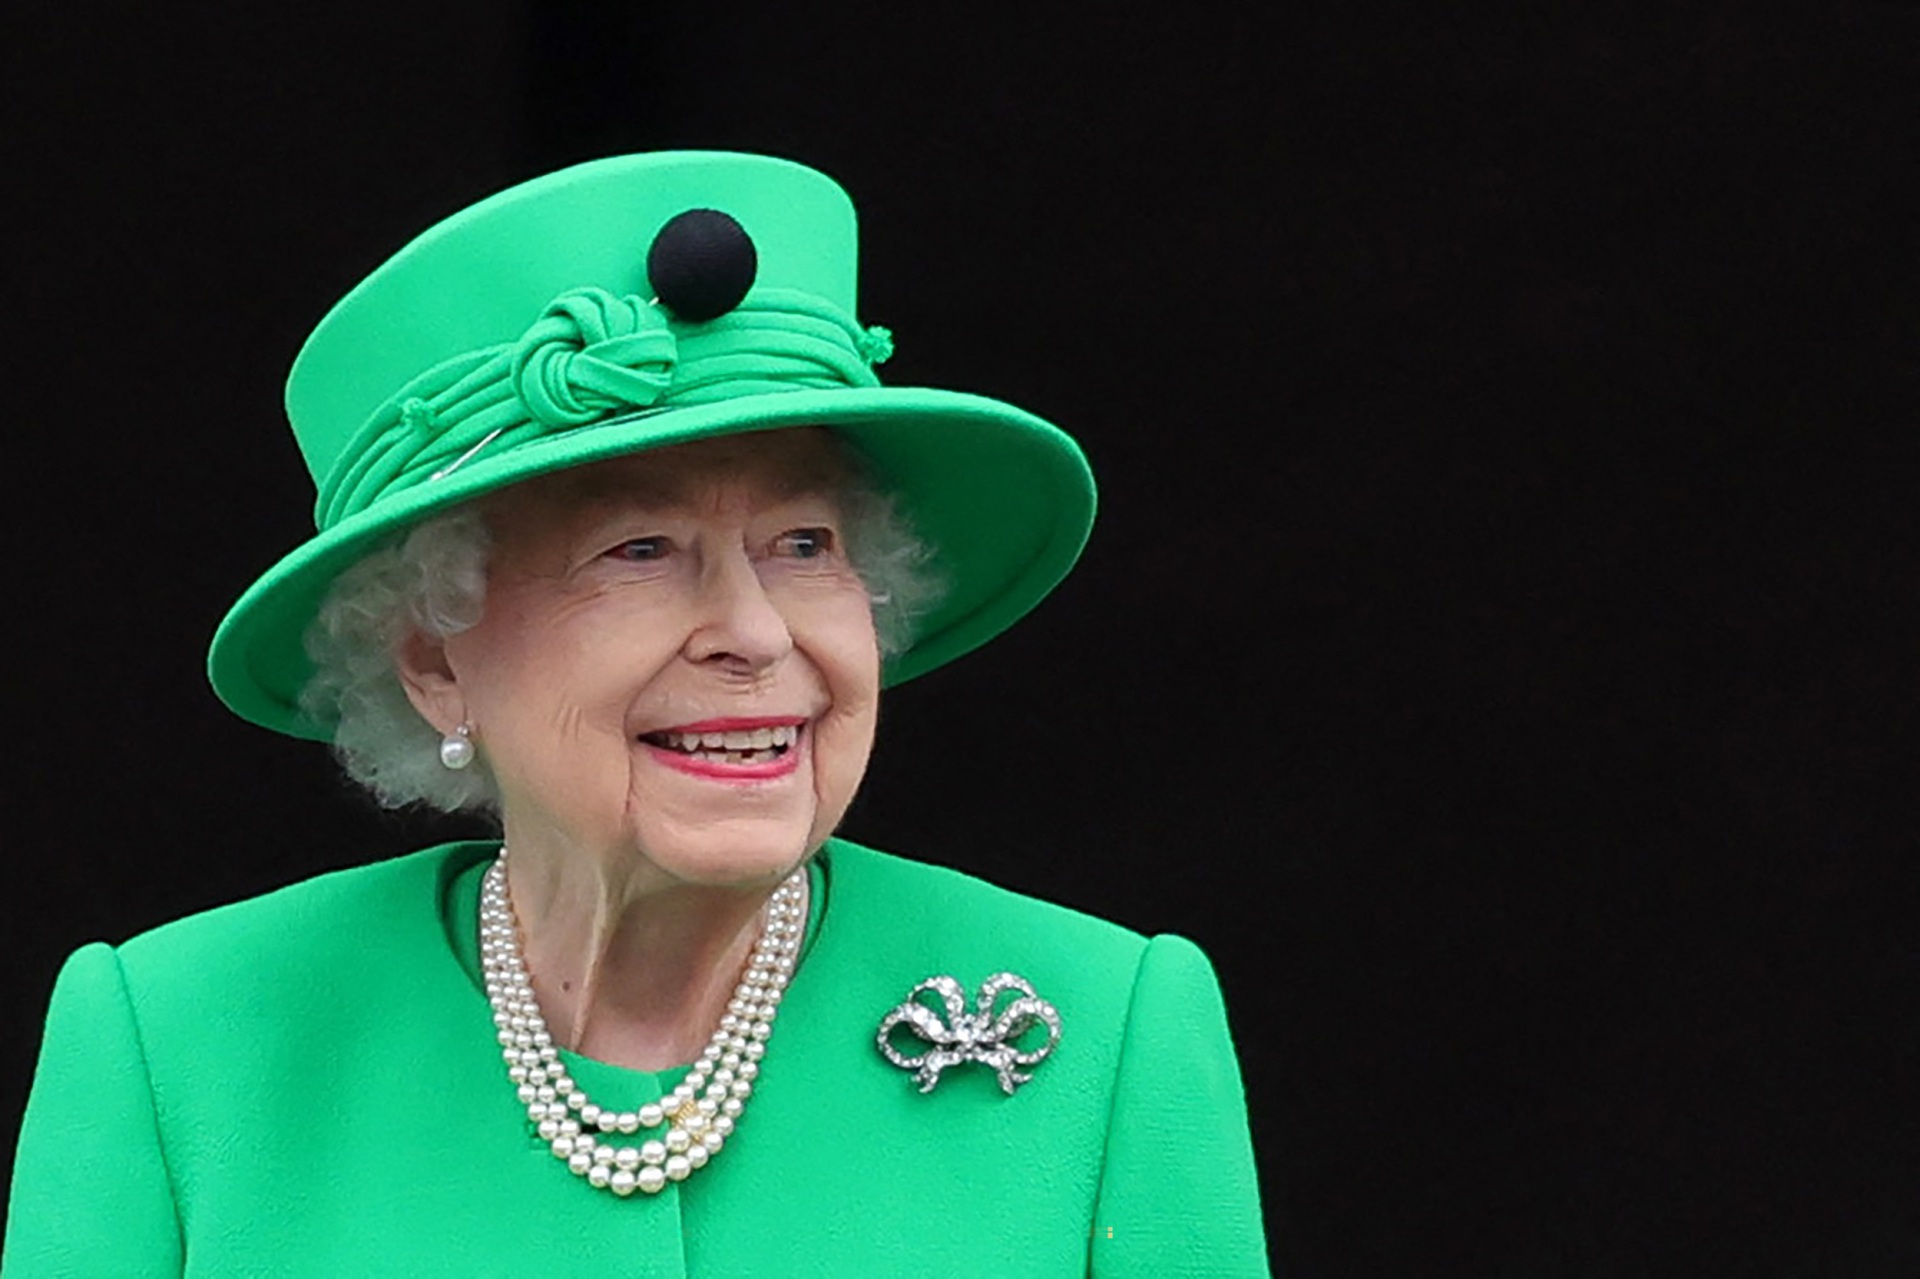 Queen Elizabeth II 'Defined an Era' of 'Constant Change' - Internewscast